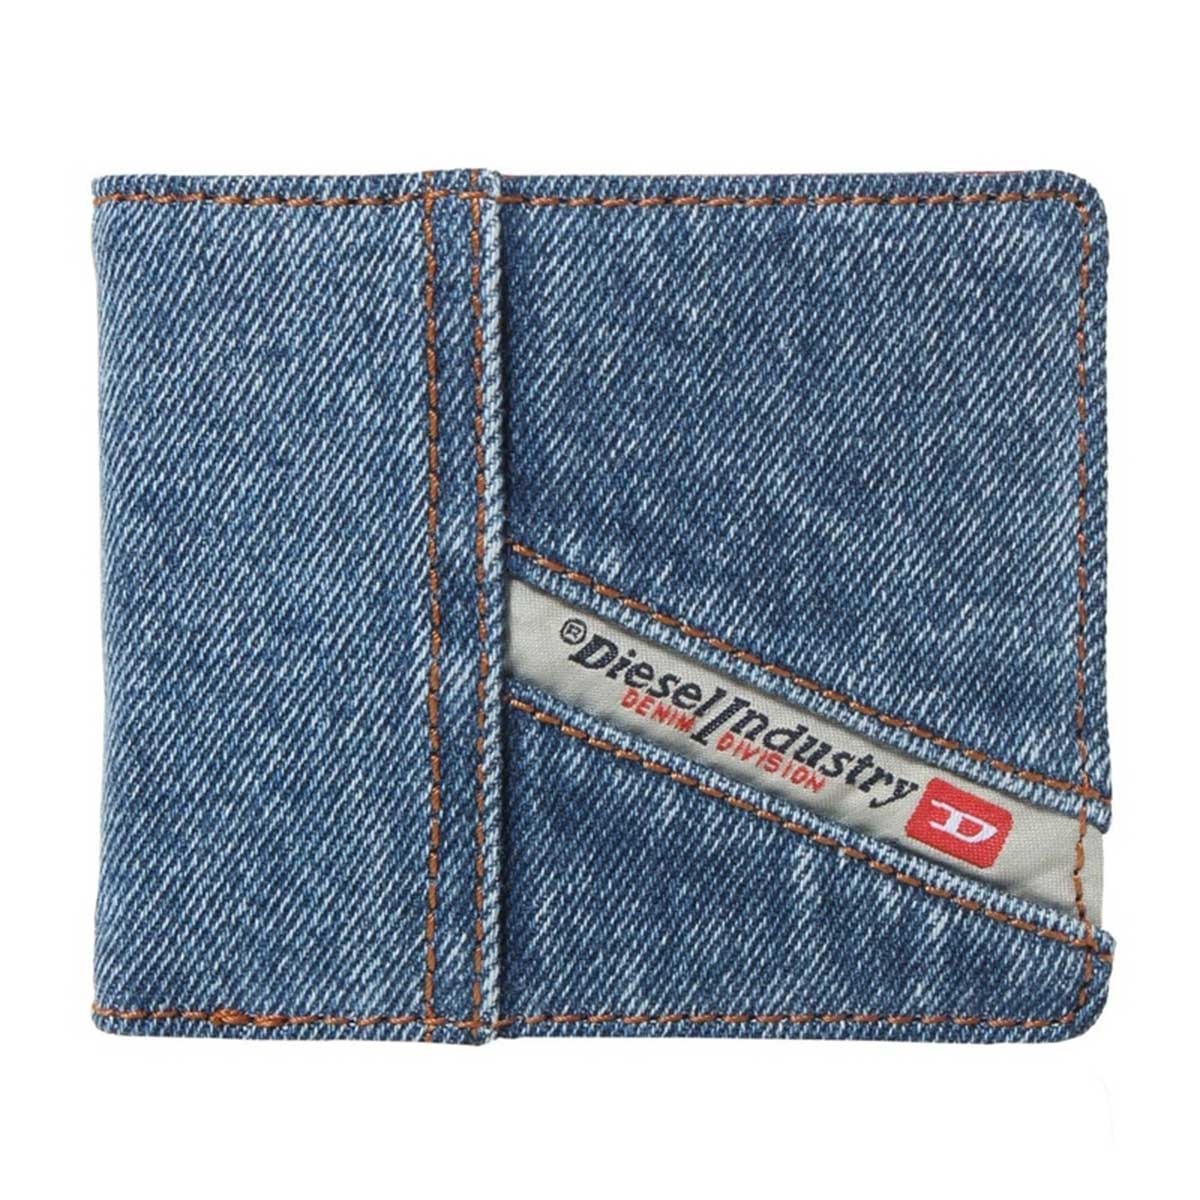 DIESEL DAVYS Hiresh S X08450P4493 （ブルー） メンズ二つ折り財布の商品画像